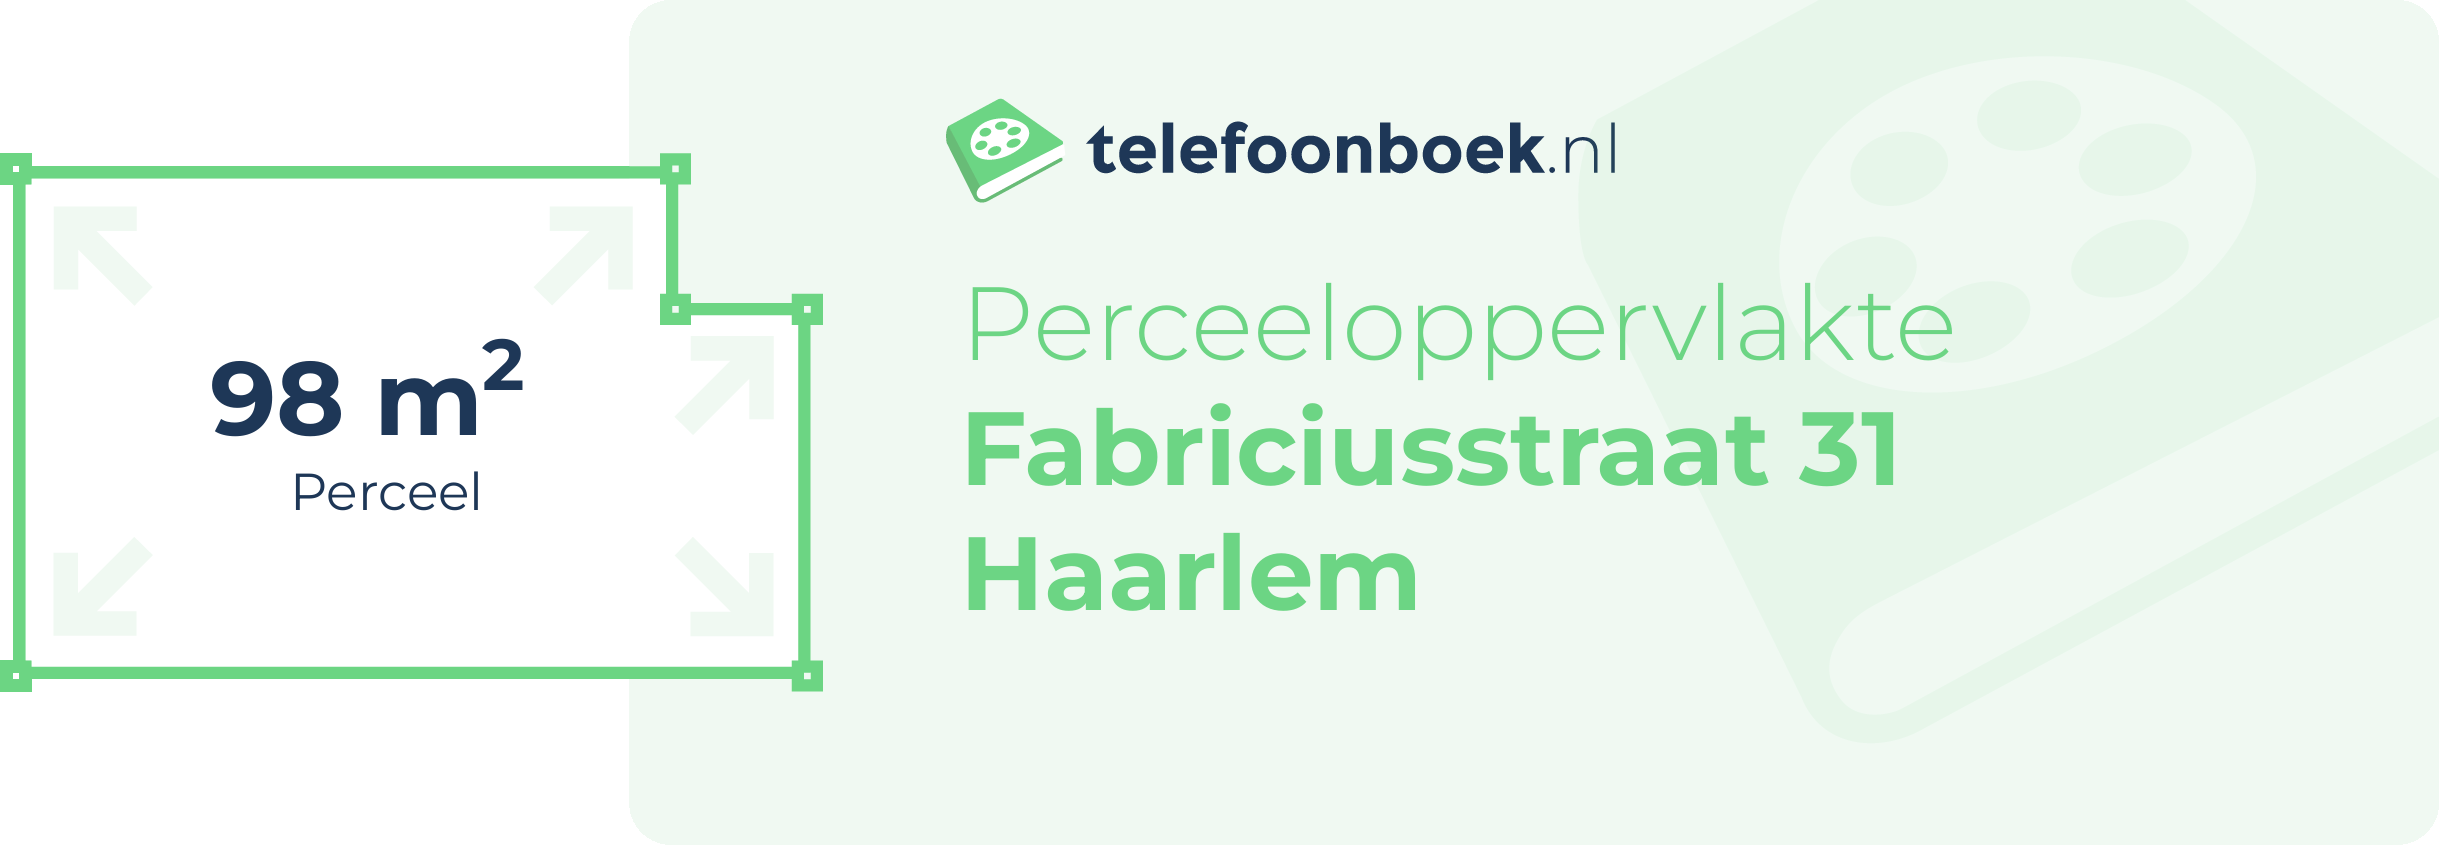 Perceeloppervlakte Fabriciusstraat 31 Haarlem